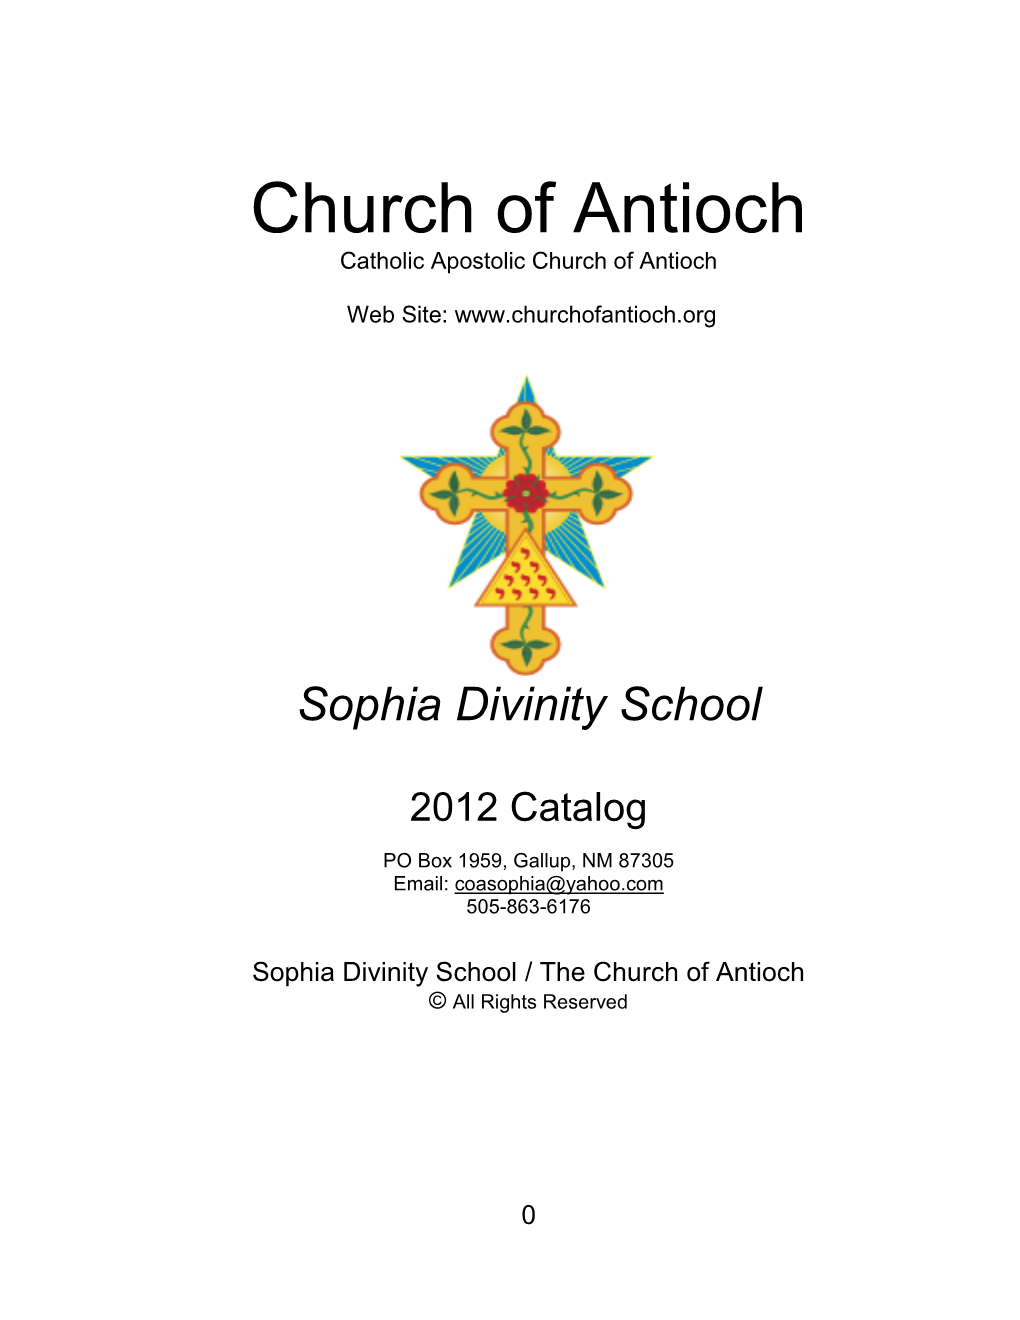 Sophia Divinity School